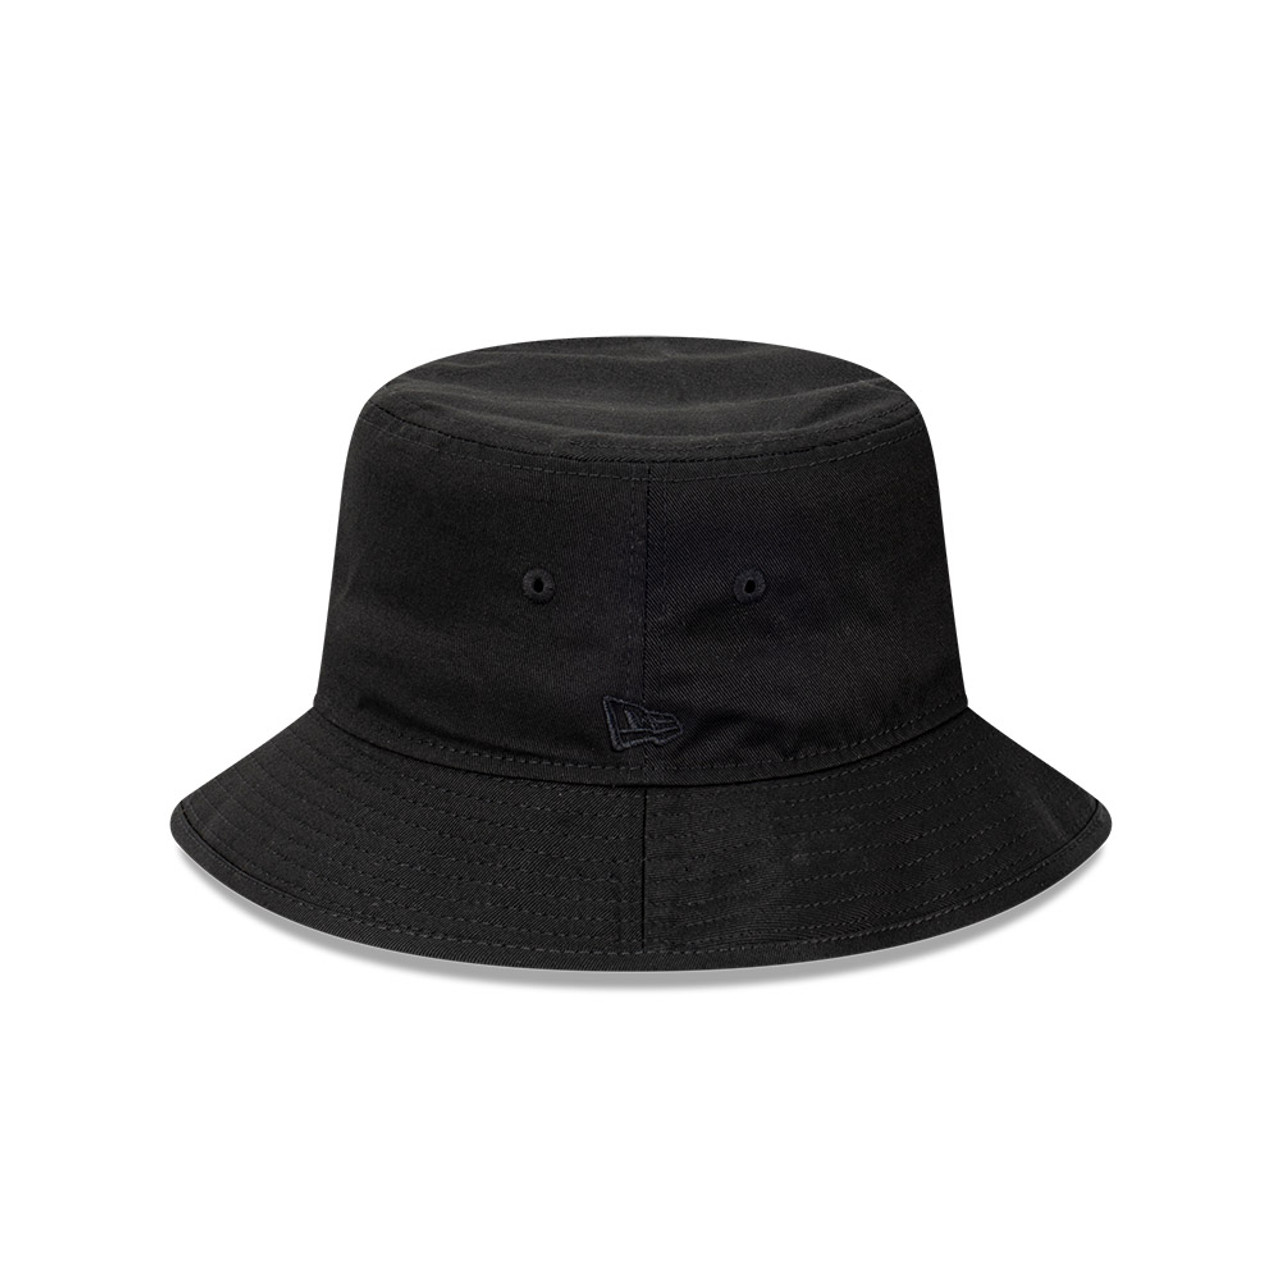 Fremantle Dockers New Era Black on Black Bucket Hat - The Dock ...